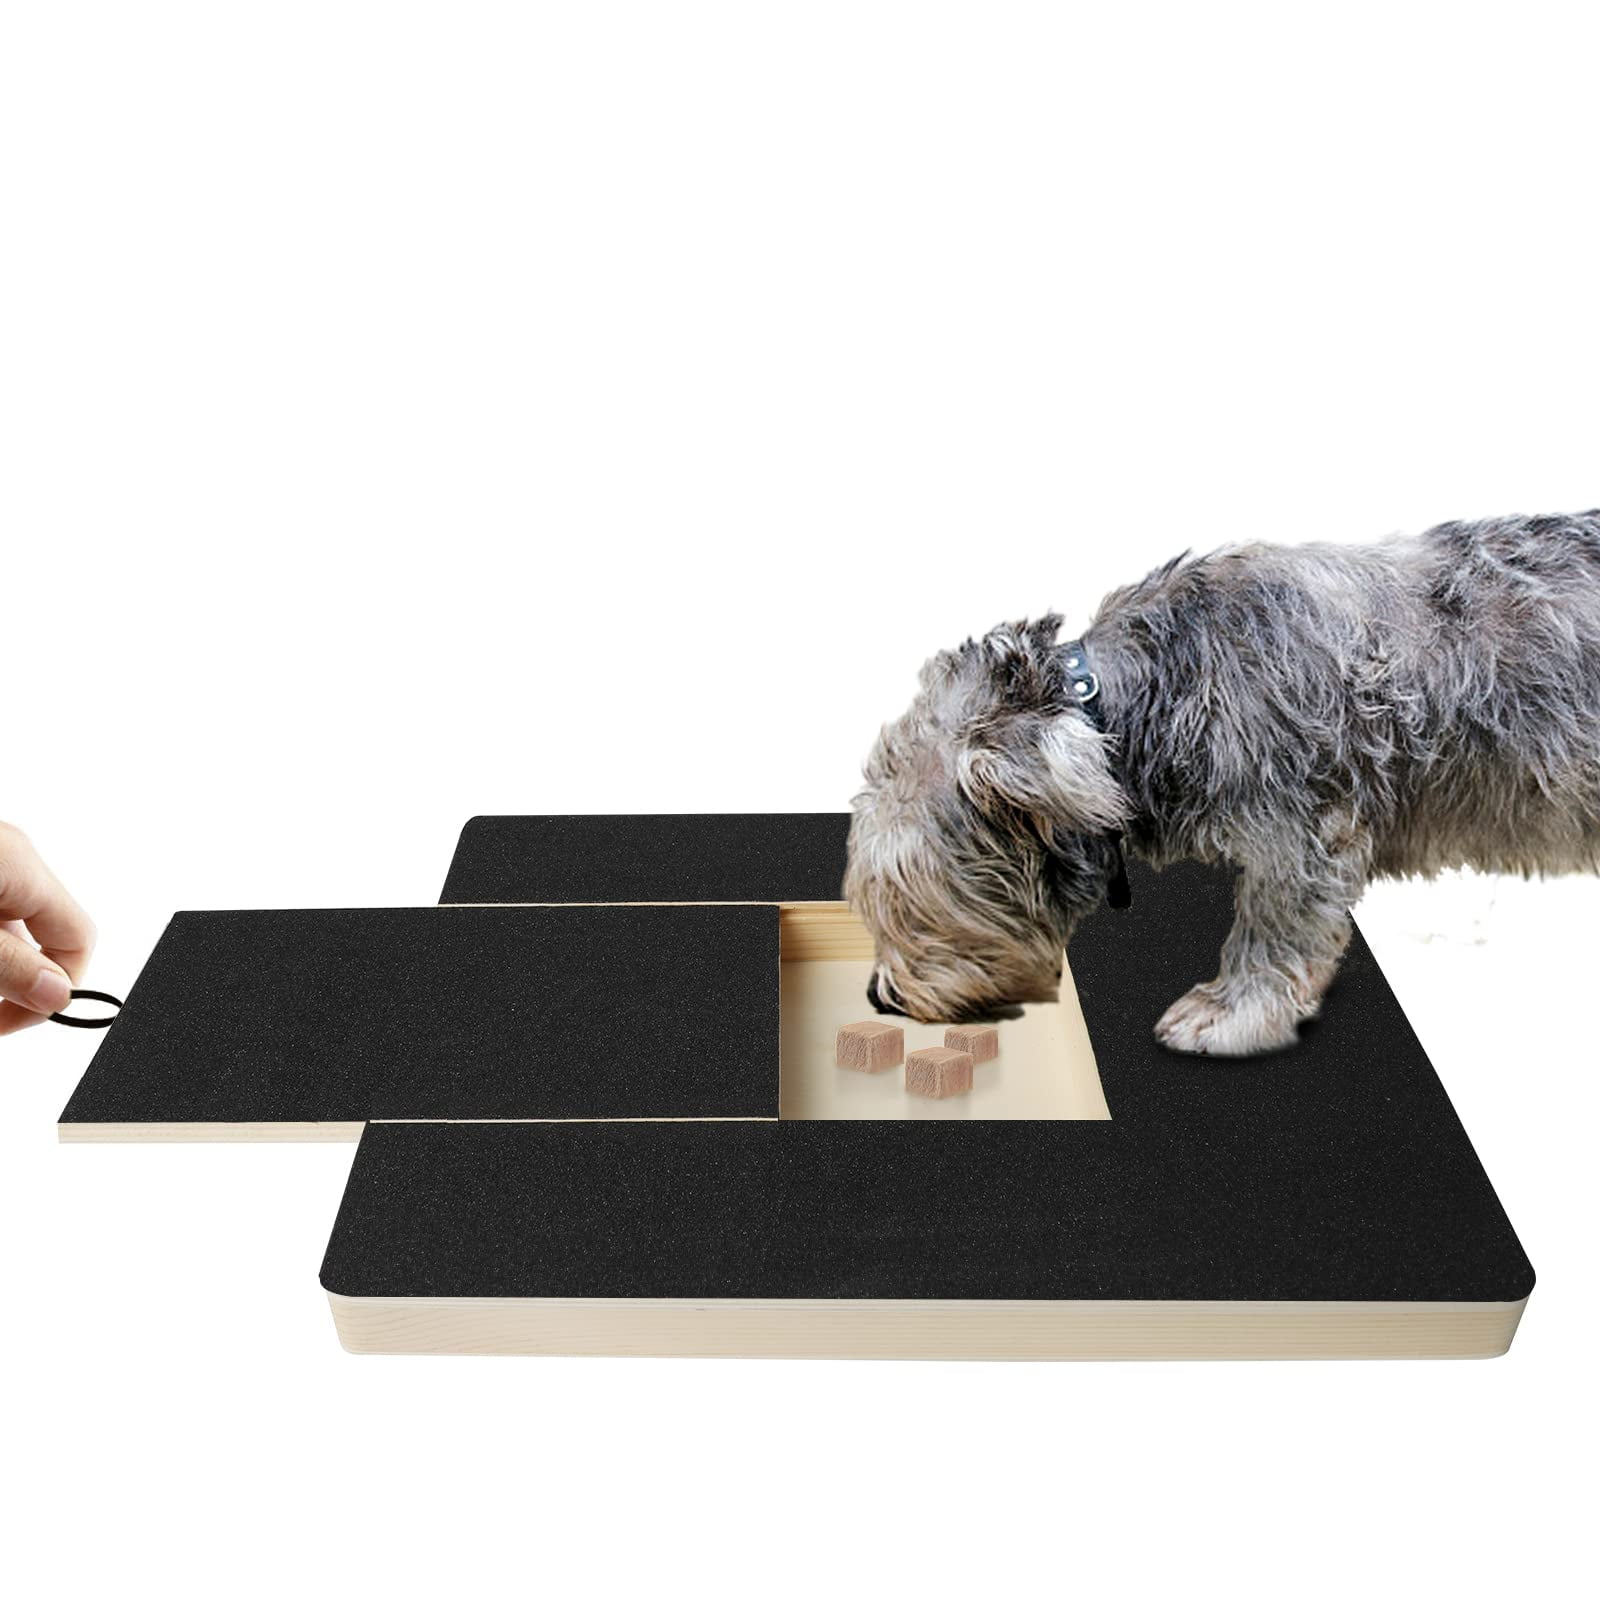 Pejoyt Dog Scratch Pad for Nails Dog Nail Square Scratching Board Sandpaper Scratch Board File for Puppy Black 9287ba76 3bbe 418a b78c 9e64b564913e.174443eb016a74a129f33baa802ac548